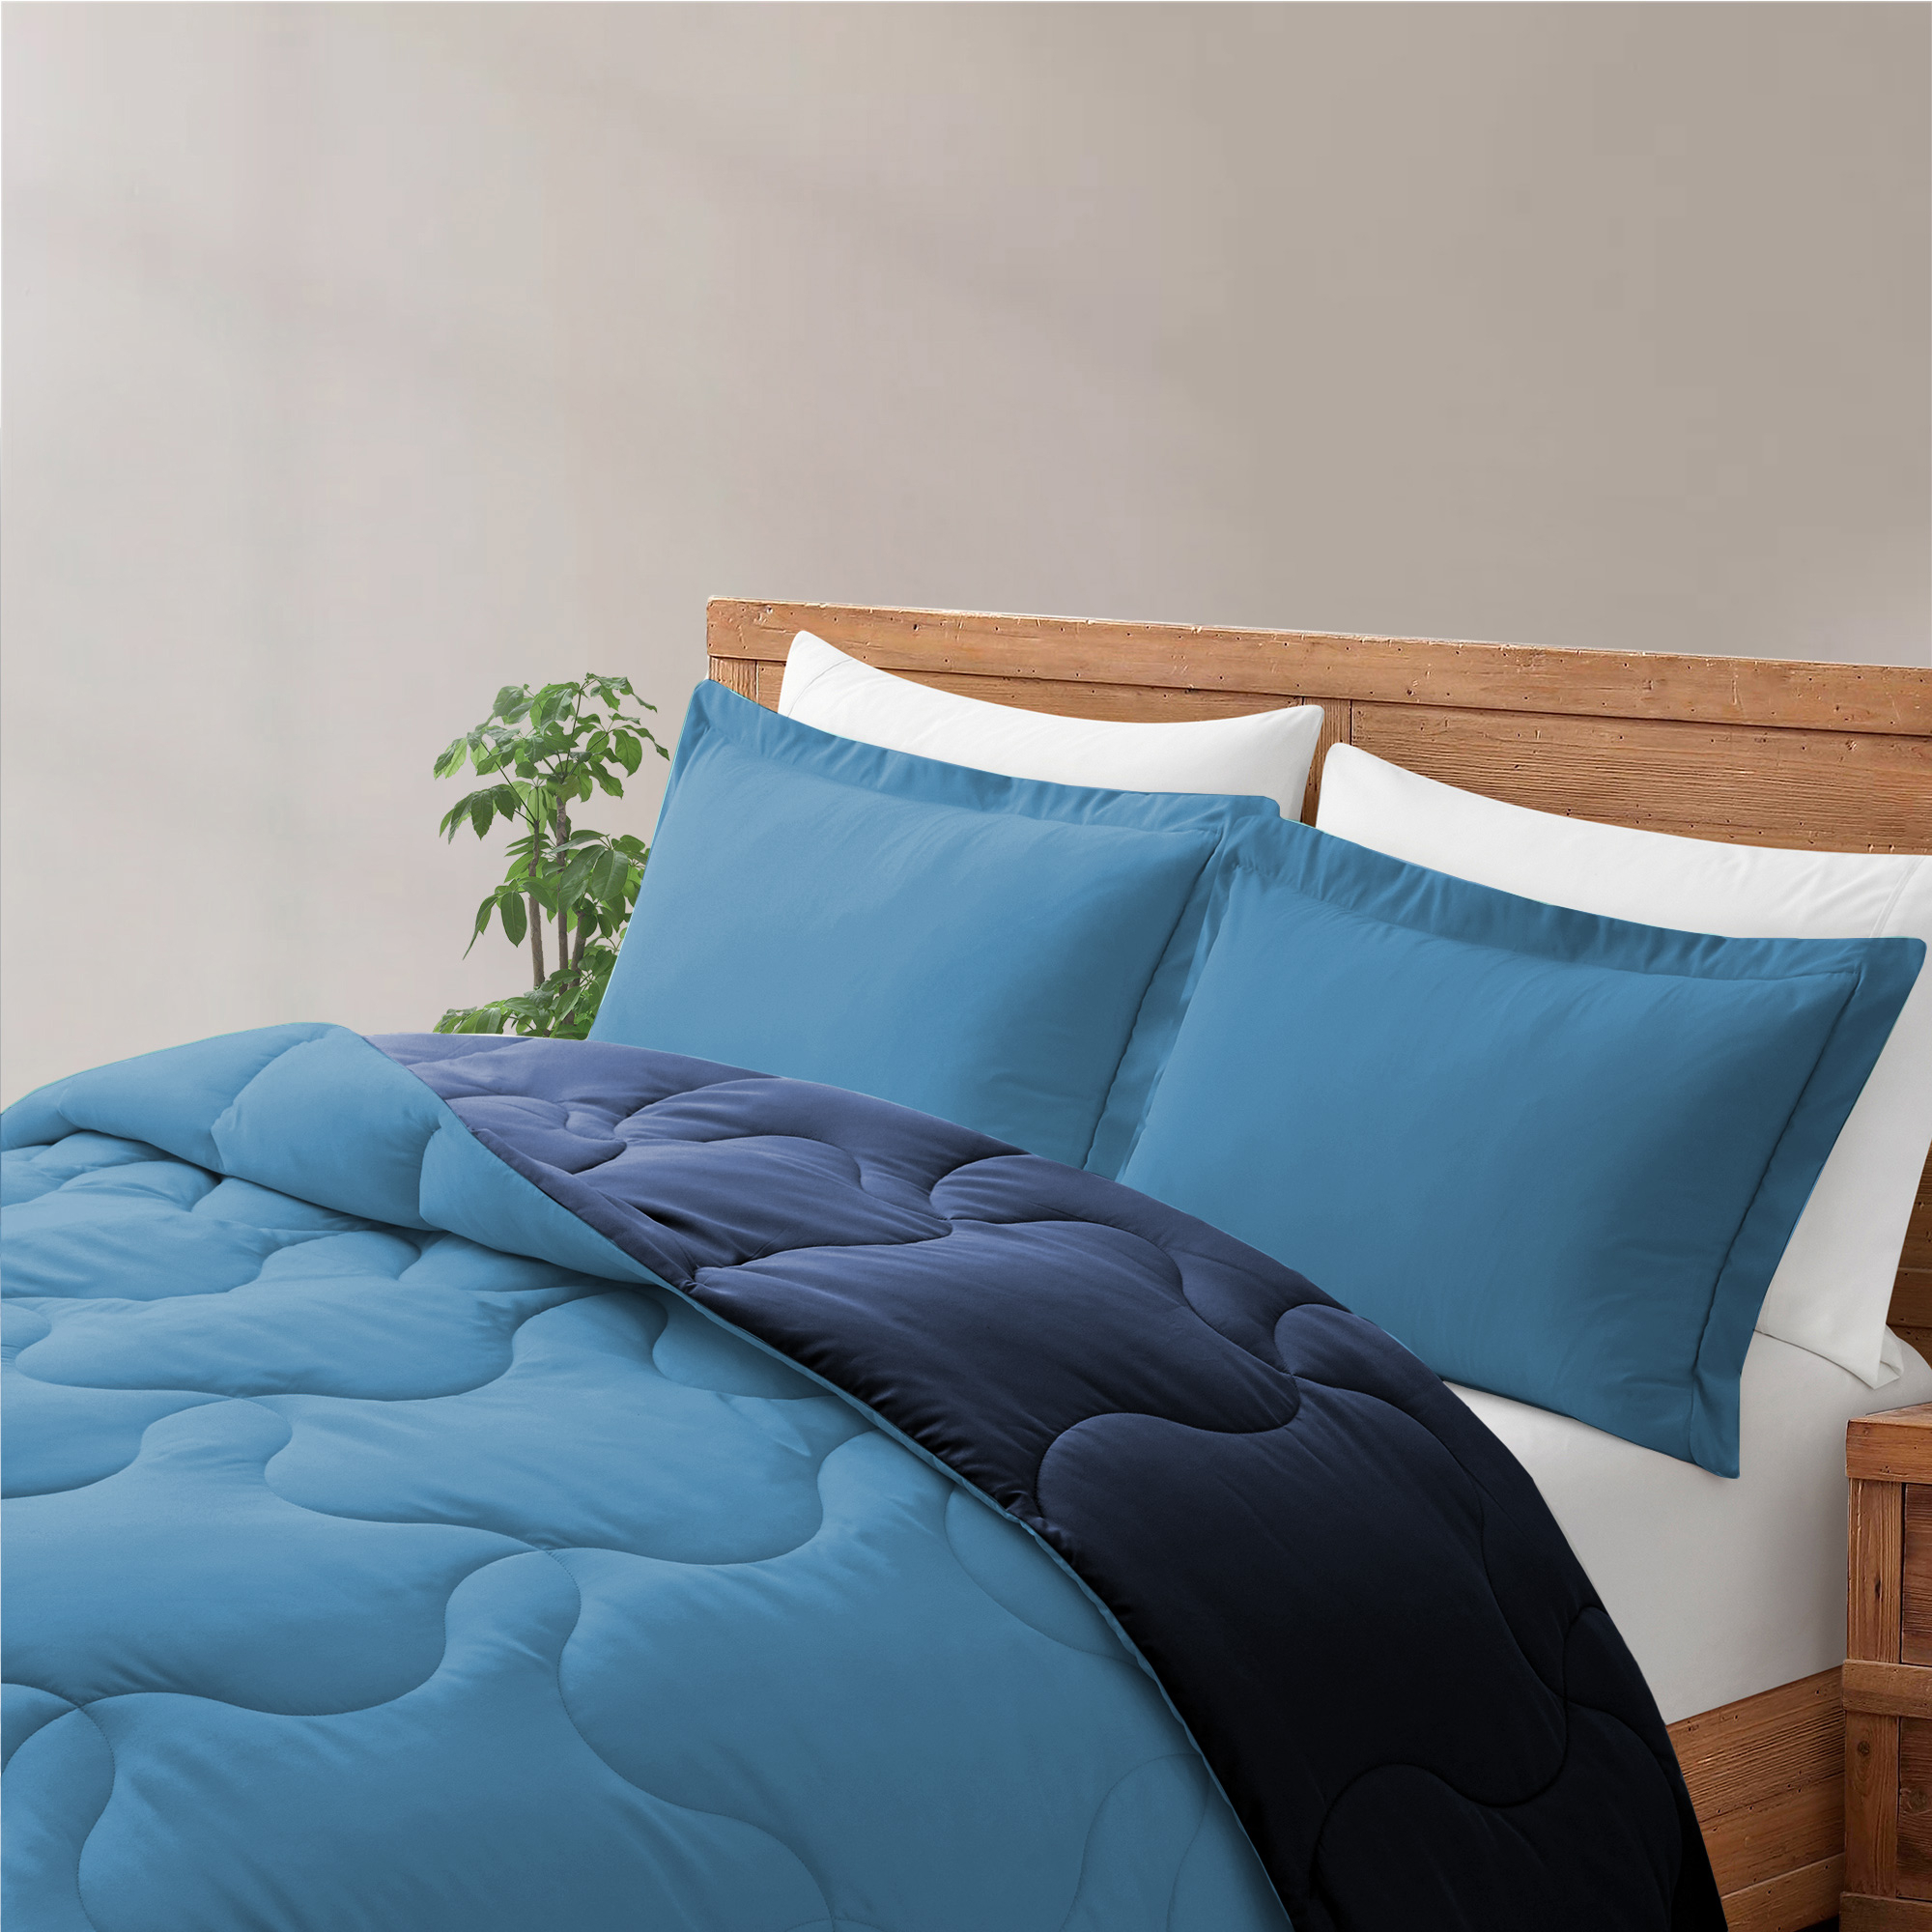 Lightweight Soft Quilted Down Alternative Comforter Reversible Duvet Insert With Corner Tabs - Full/Queen Size